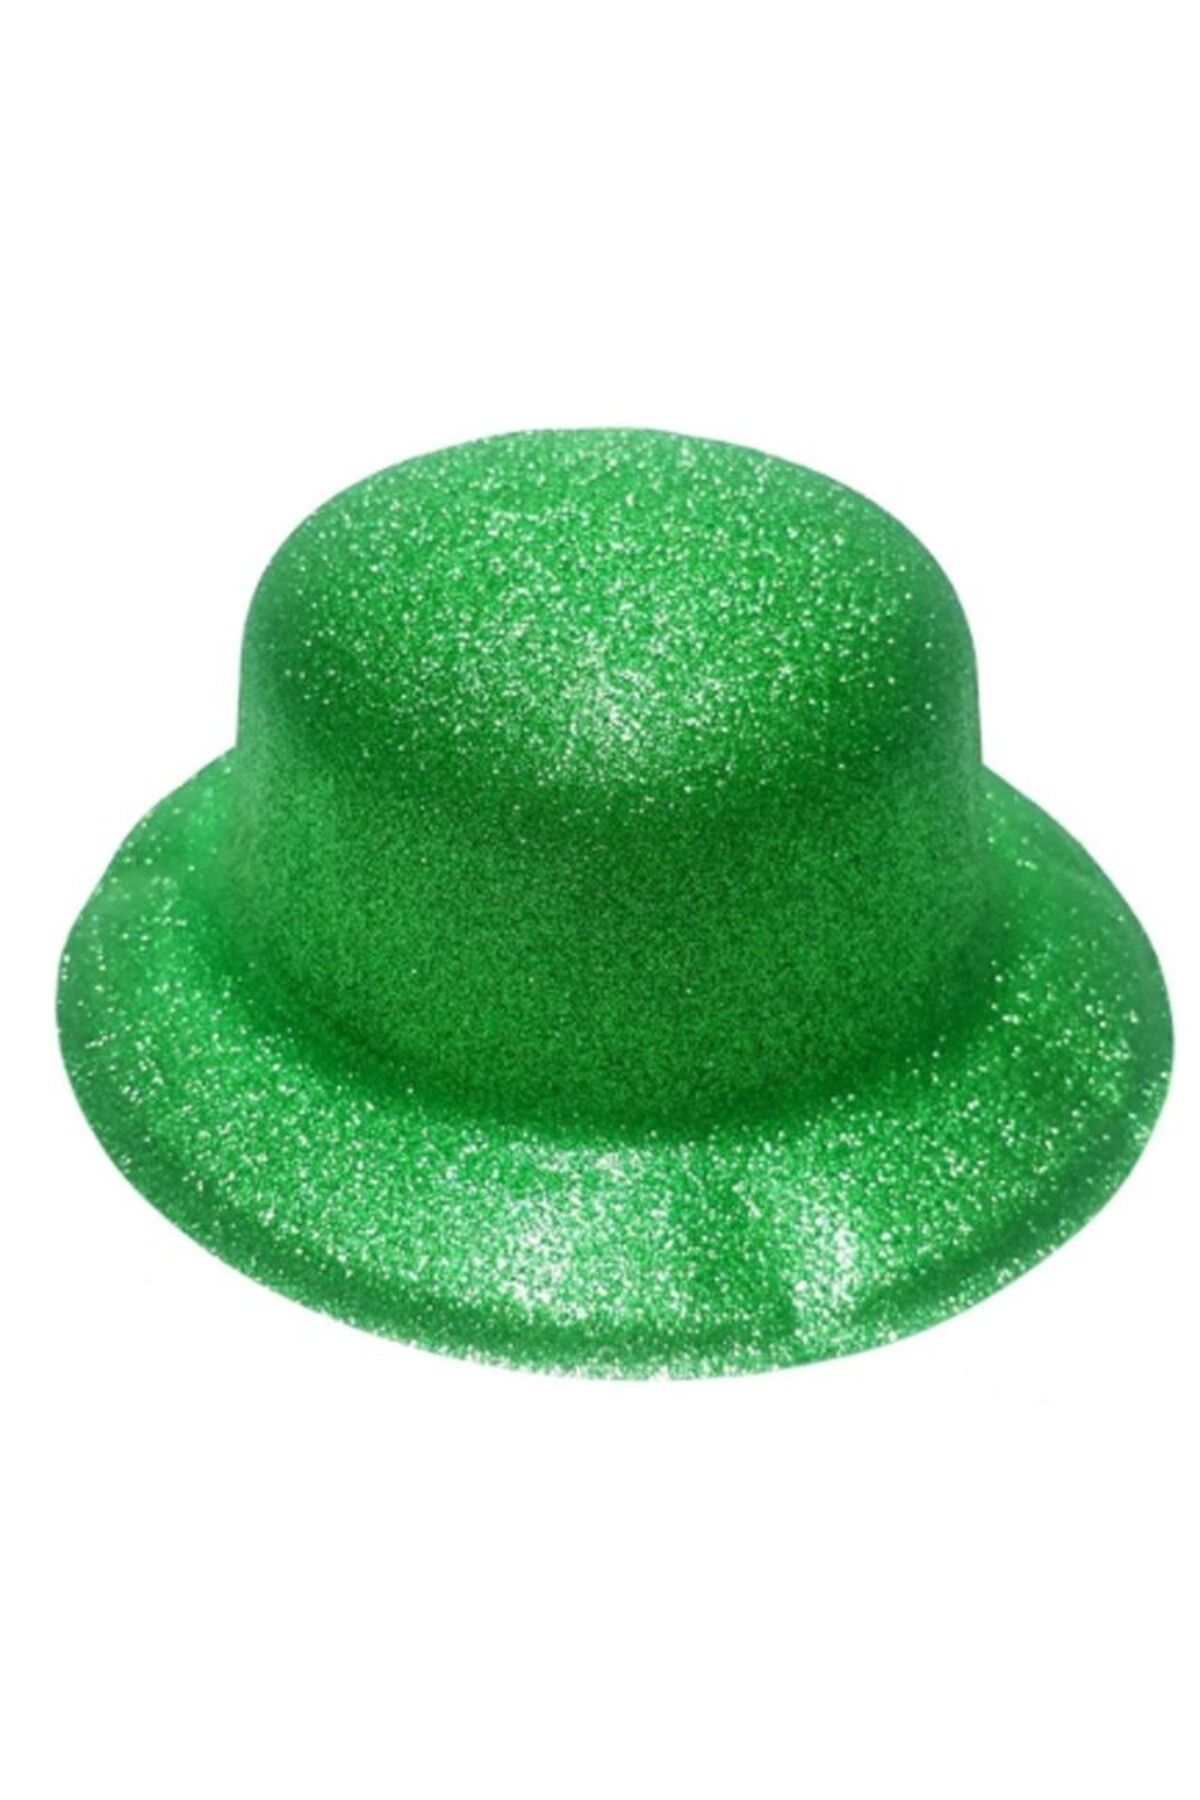 kidspartim Yeşil Renkli Lazer Yuvarlak Simli Şapka 58 cm